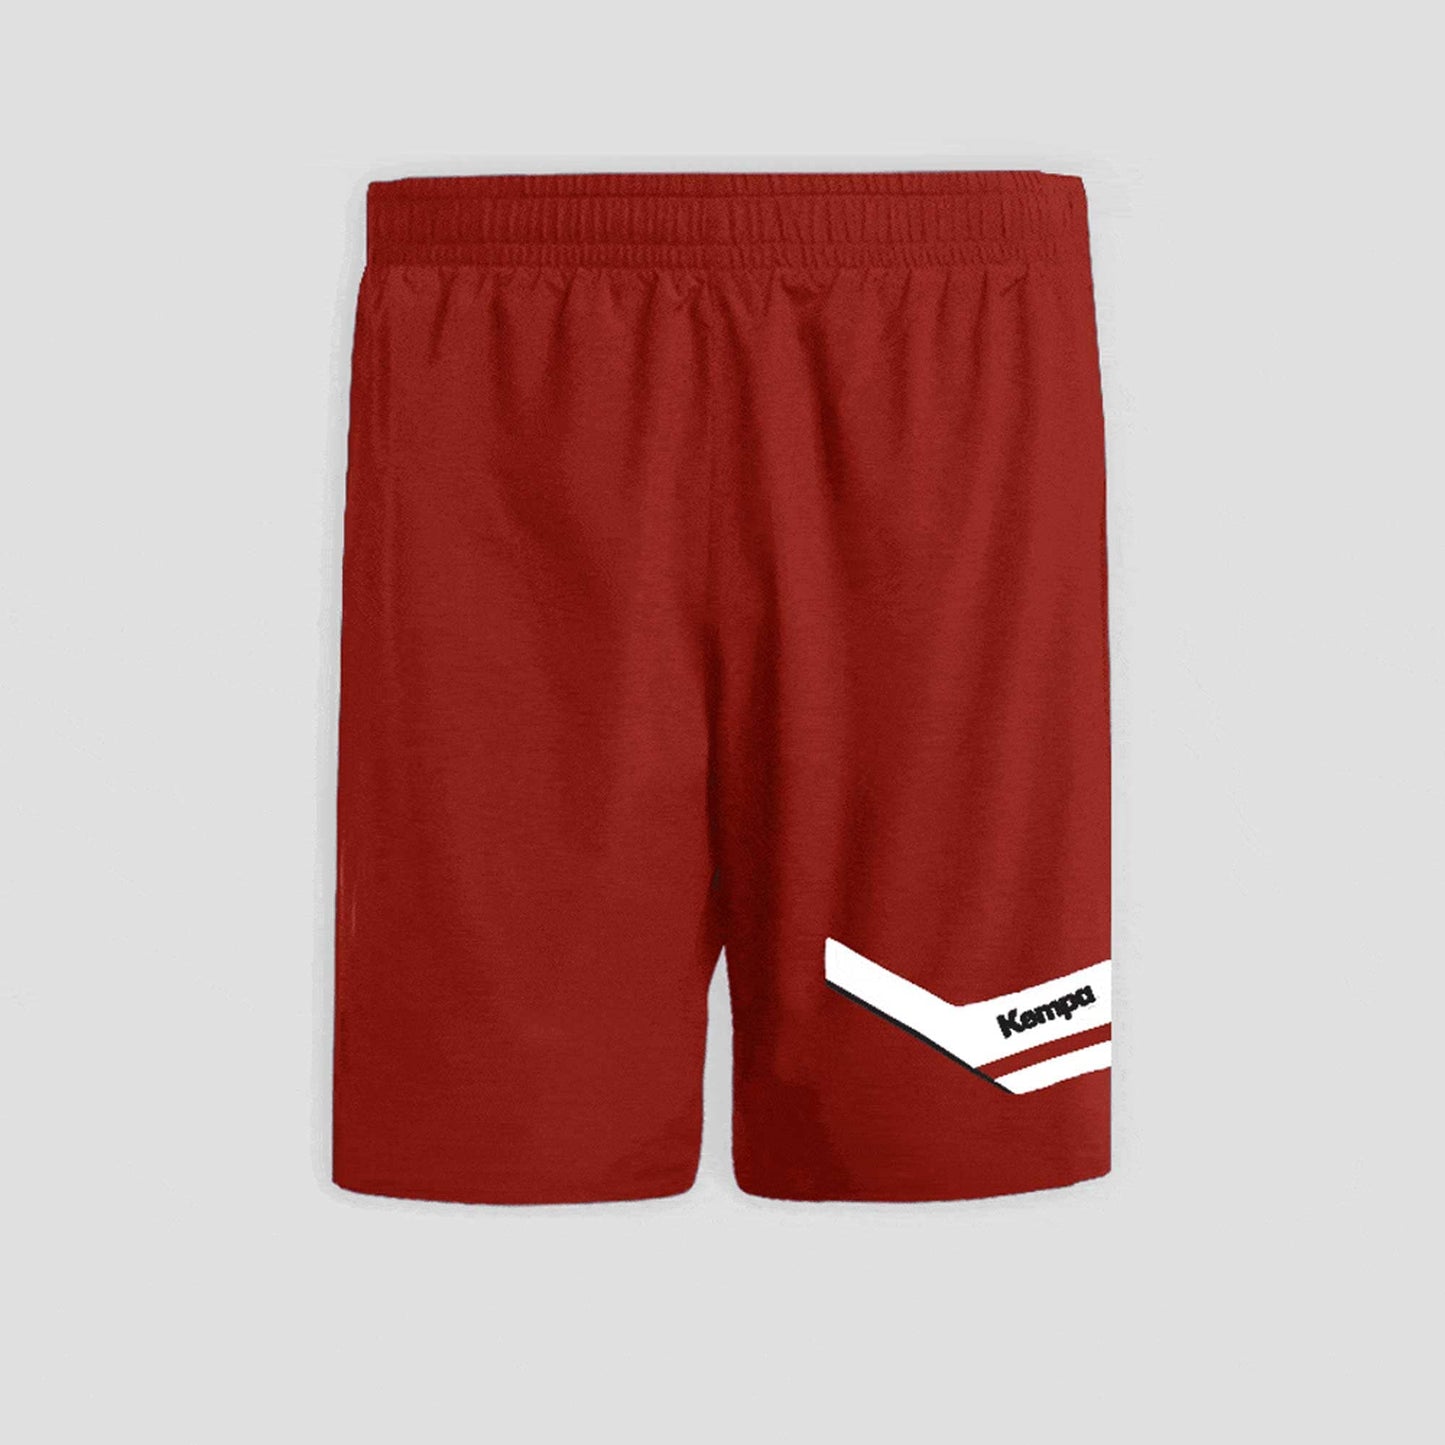 Kempa Men's Logo Printed Activewear Shorts Men's Shorts HAS Apparel Red XS 